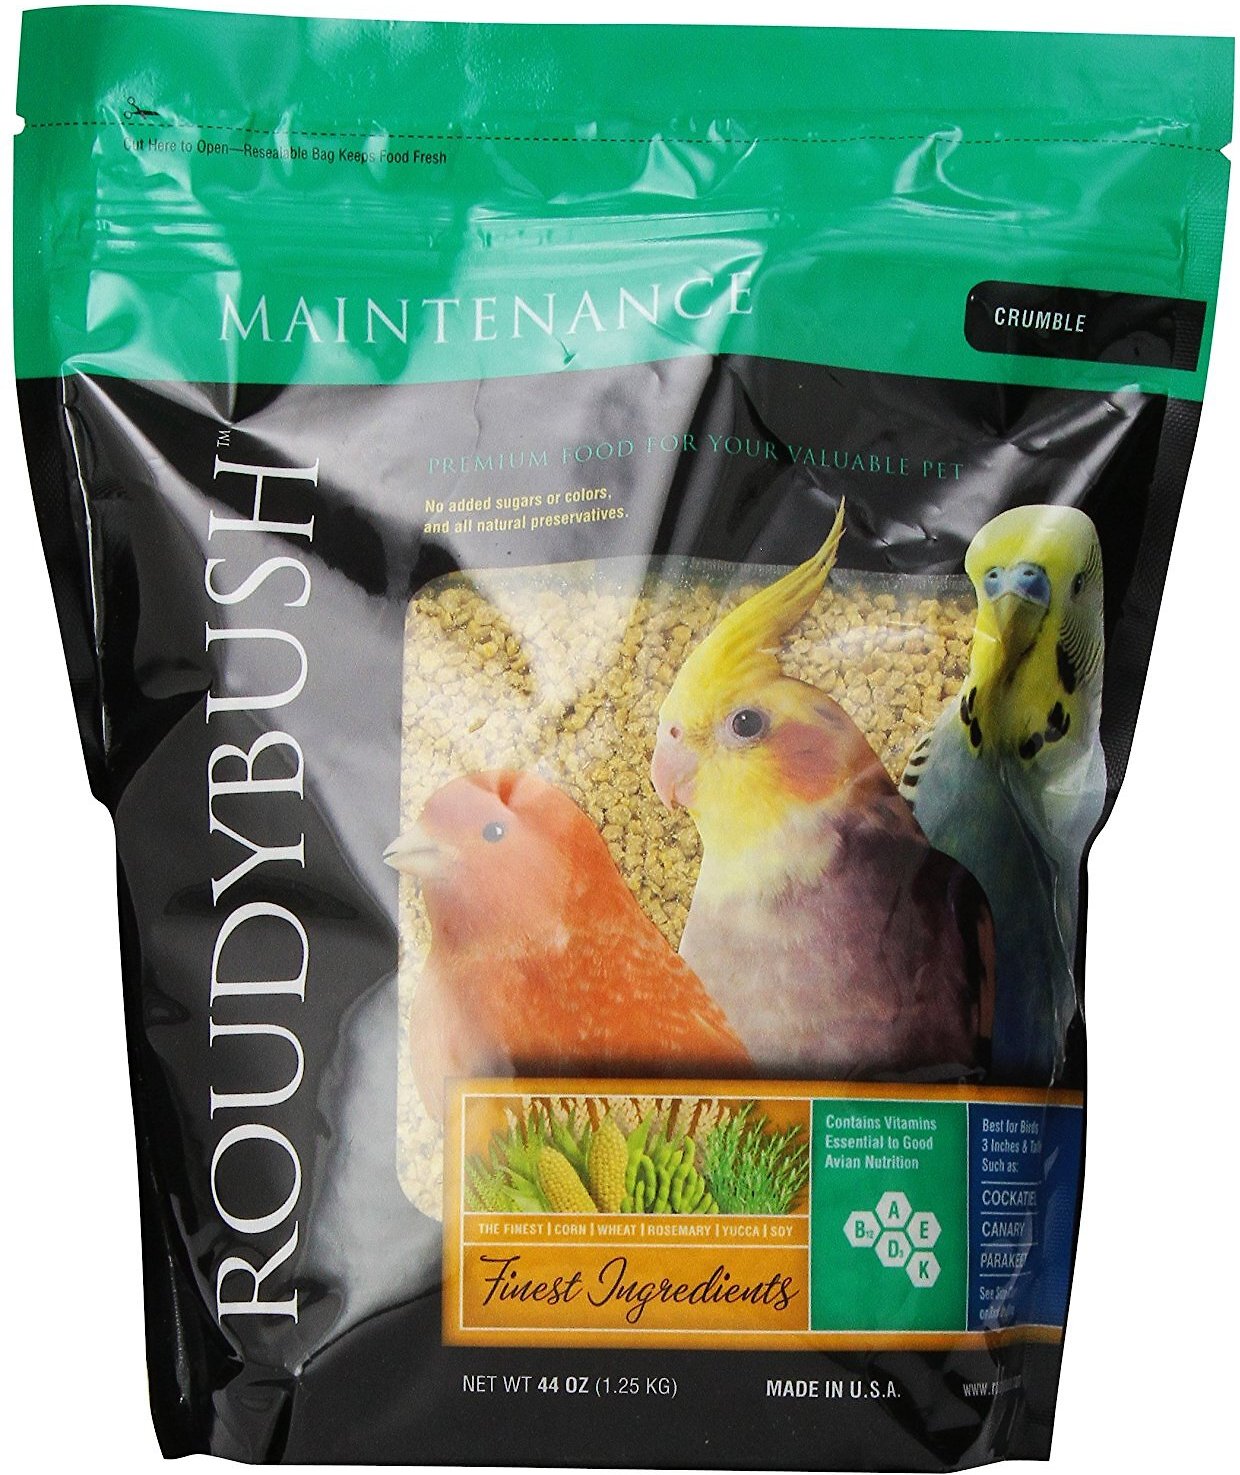 Roudybush Squab Diet for Birds 1-Pound